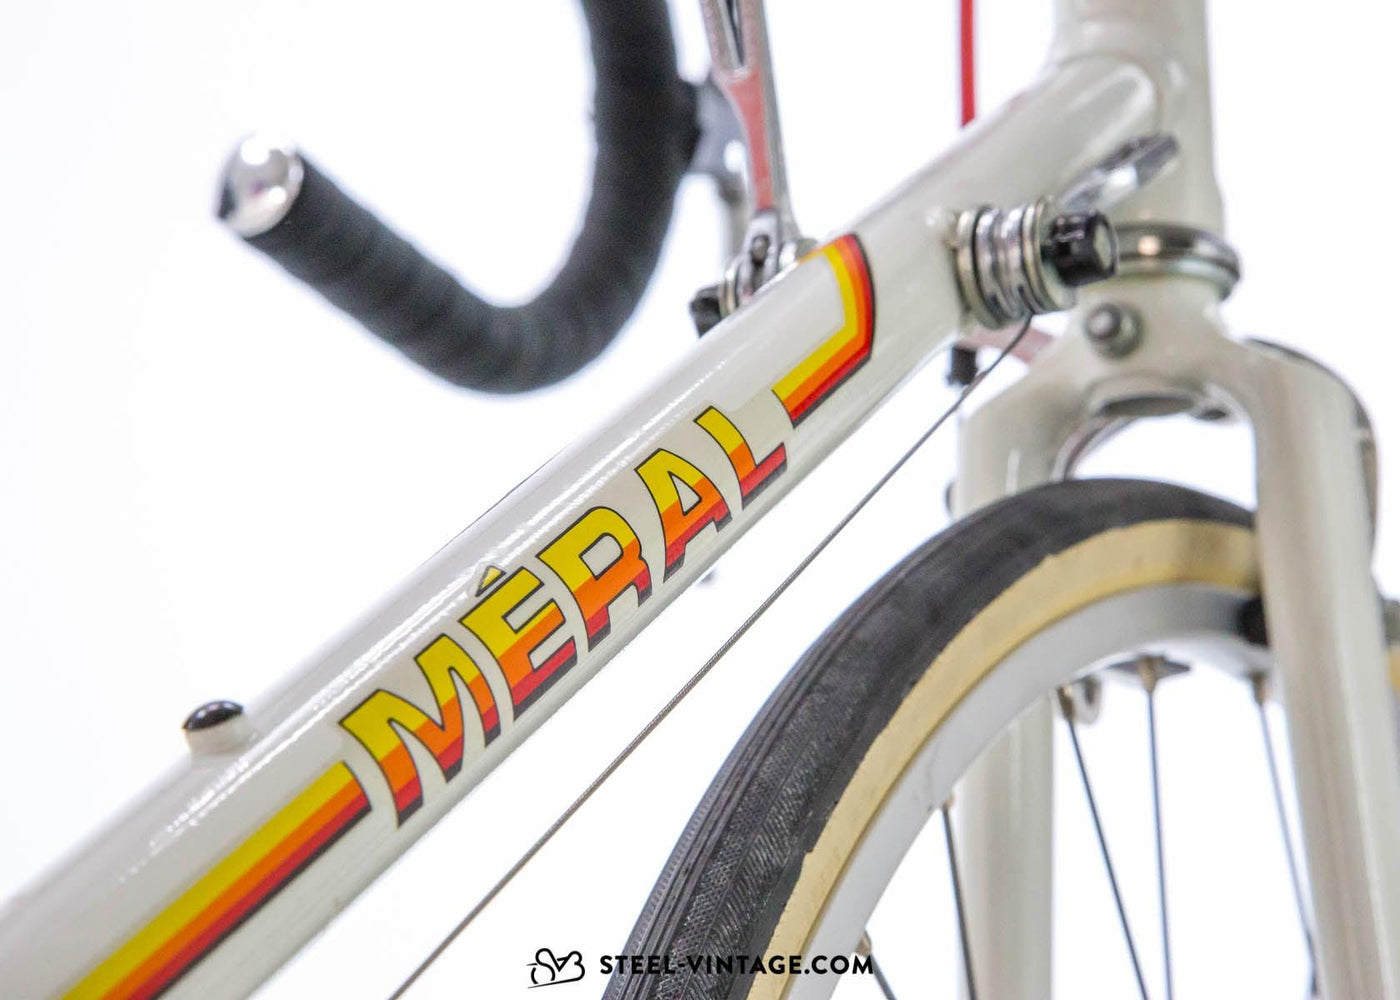 Méral Grand Prix Classic Road Bike NOS - Steel Vintage Bikes